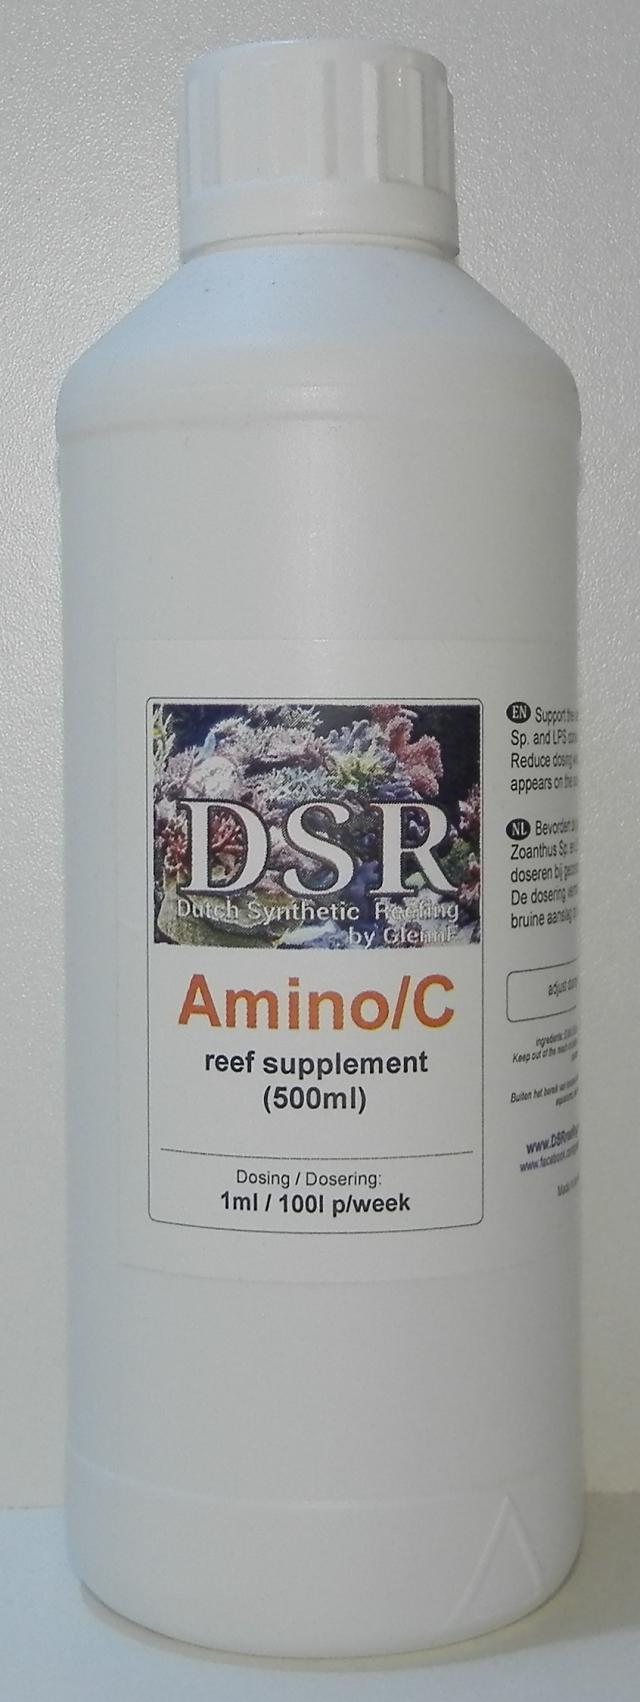 amino/c 500ml